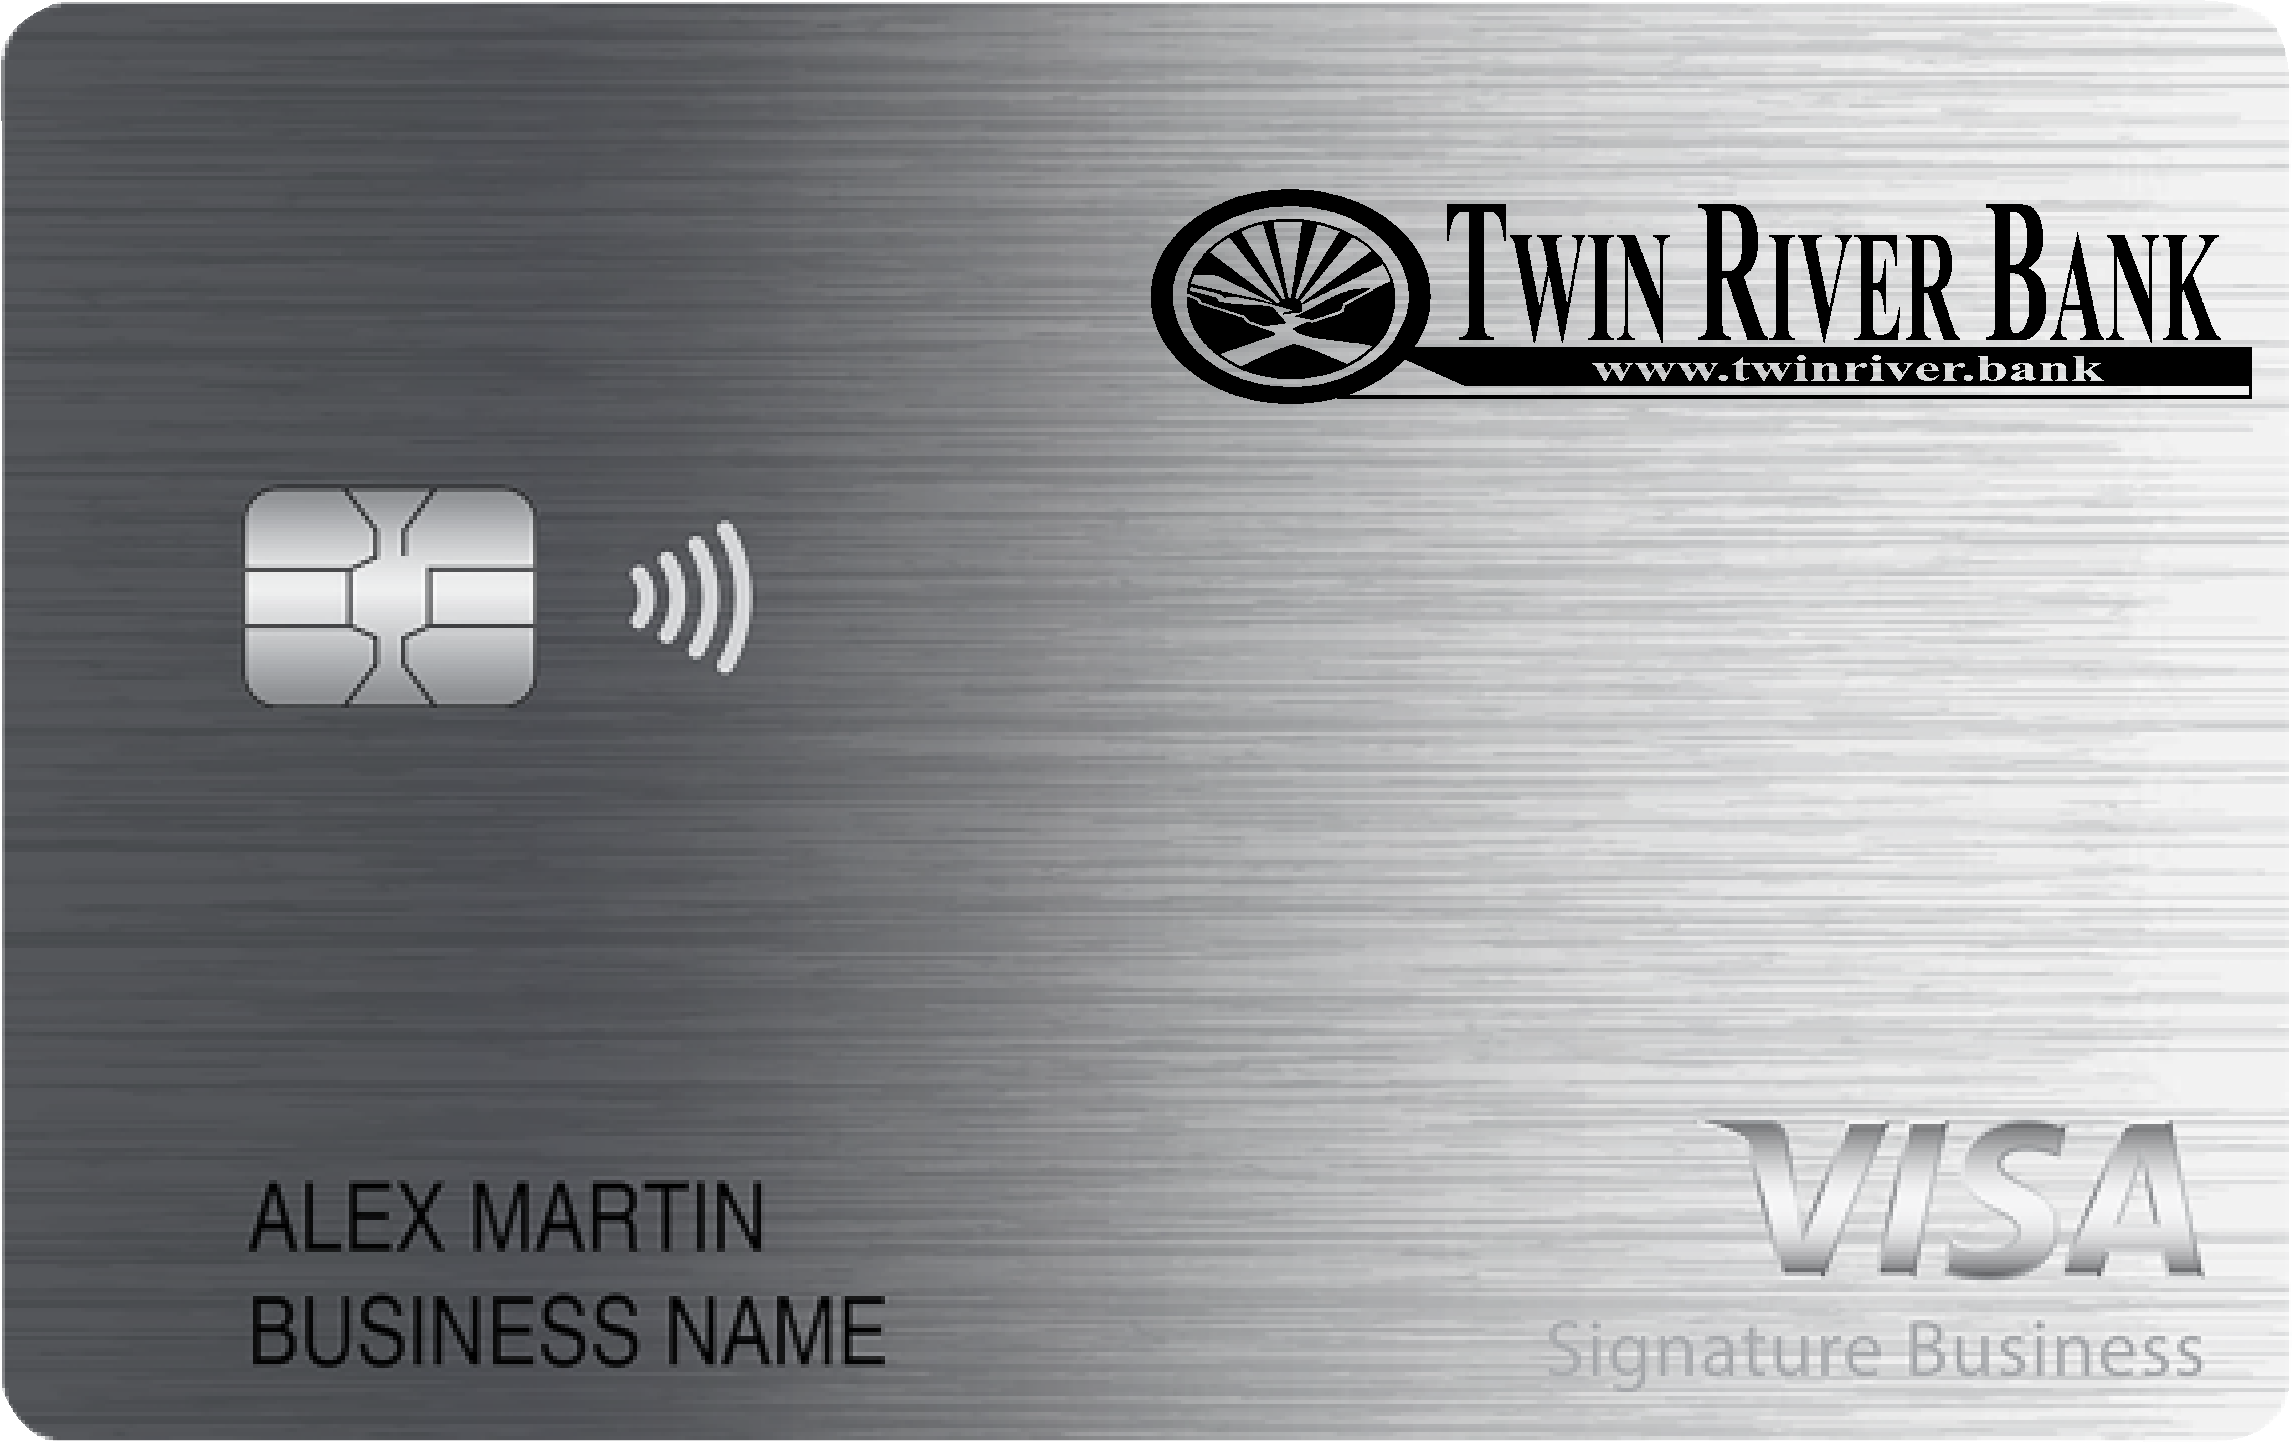 Twin River Bank Smart Business Rewards Card